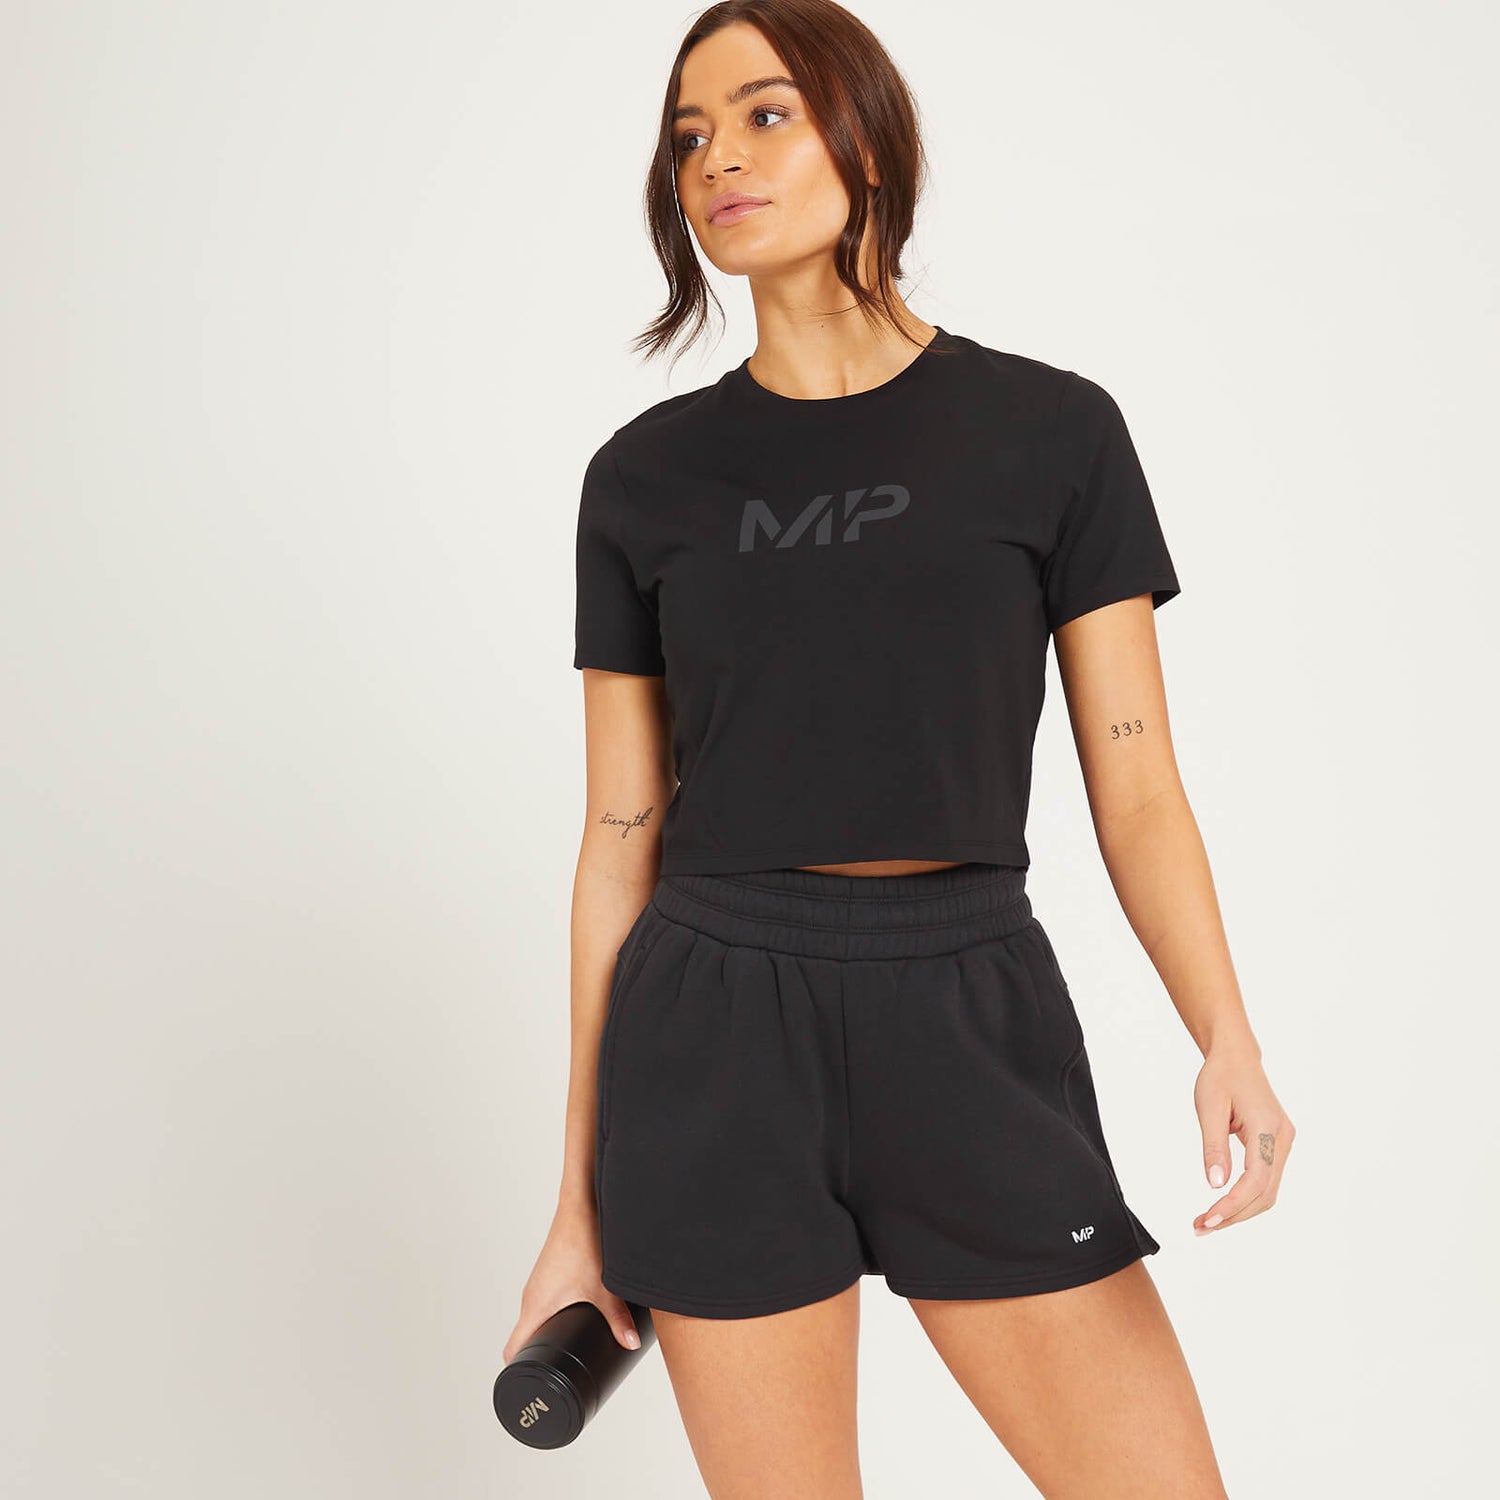 MP Adapt rövid ujjú női Crop trikó - Fekete - XXS